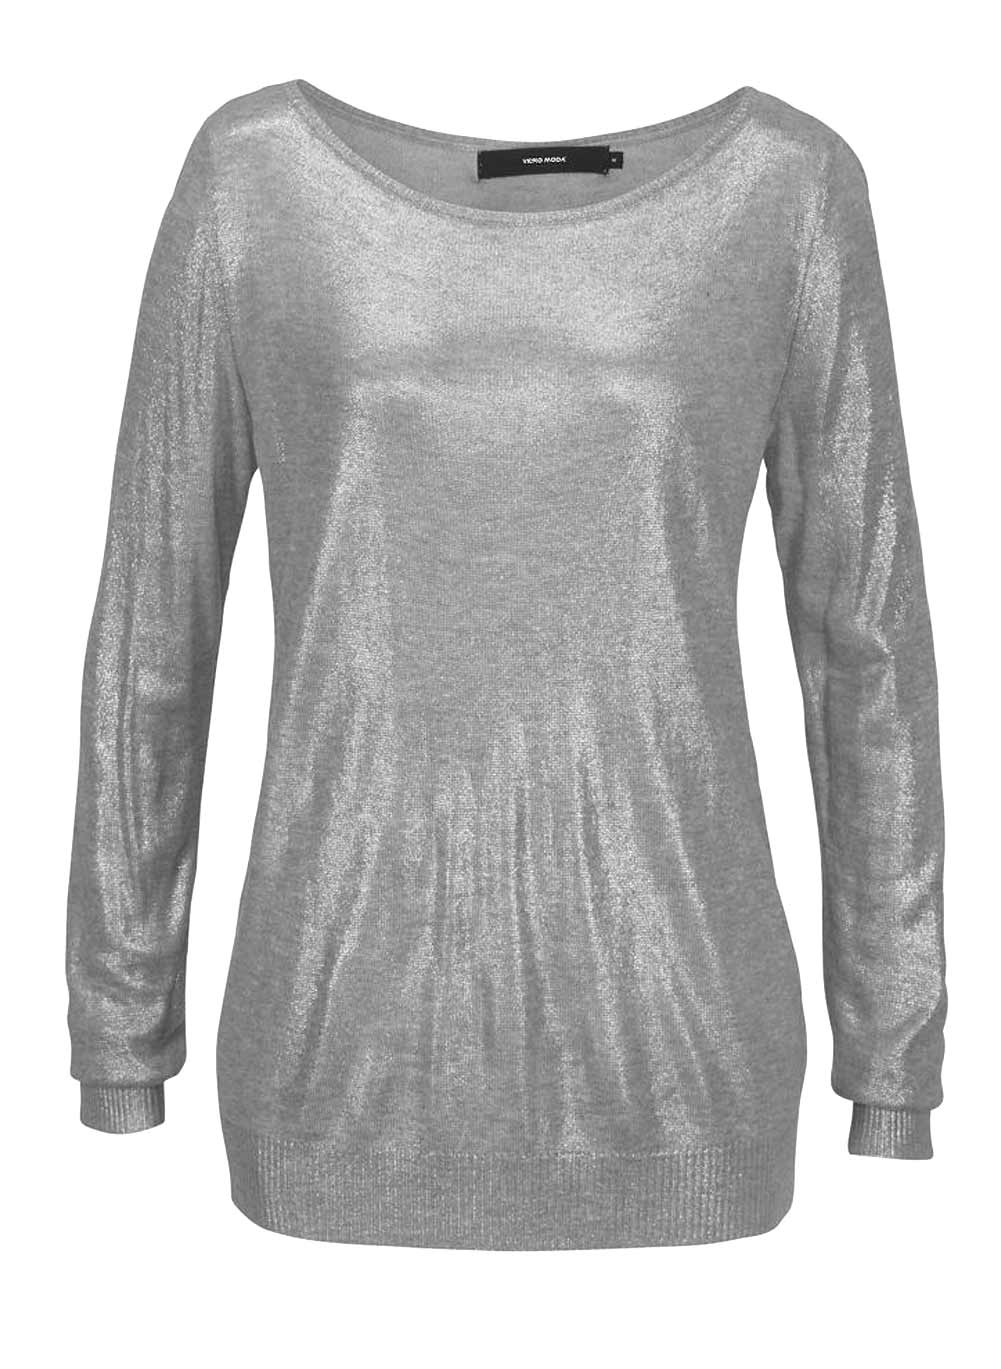 Vero Moda Damen Marken-Pullover "LUNA", grau-metallic